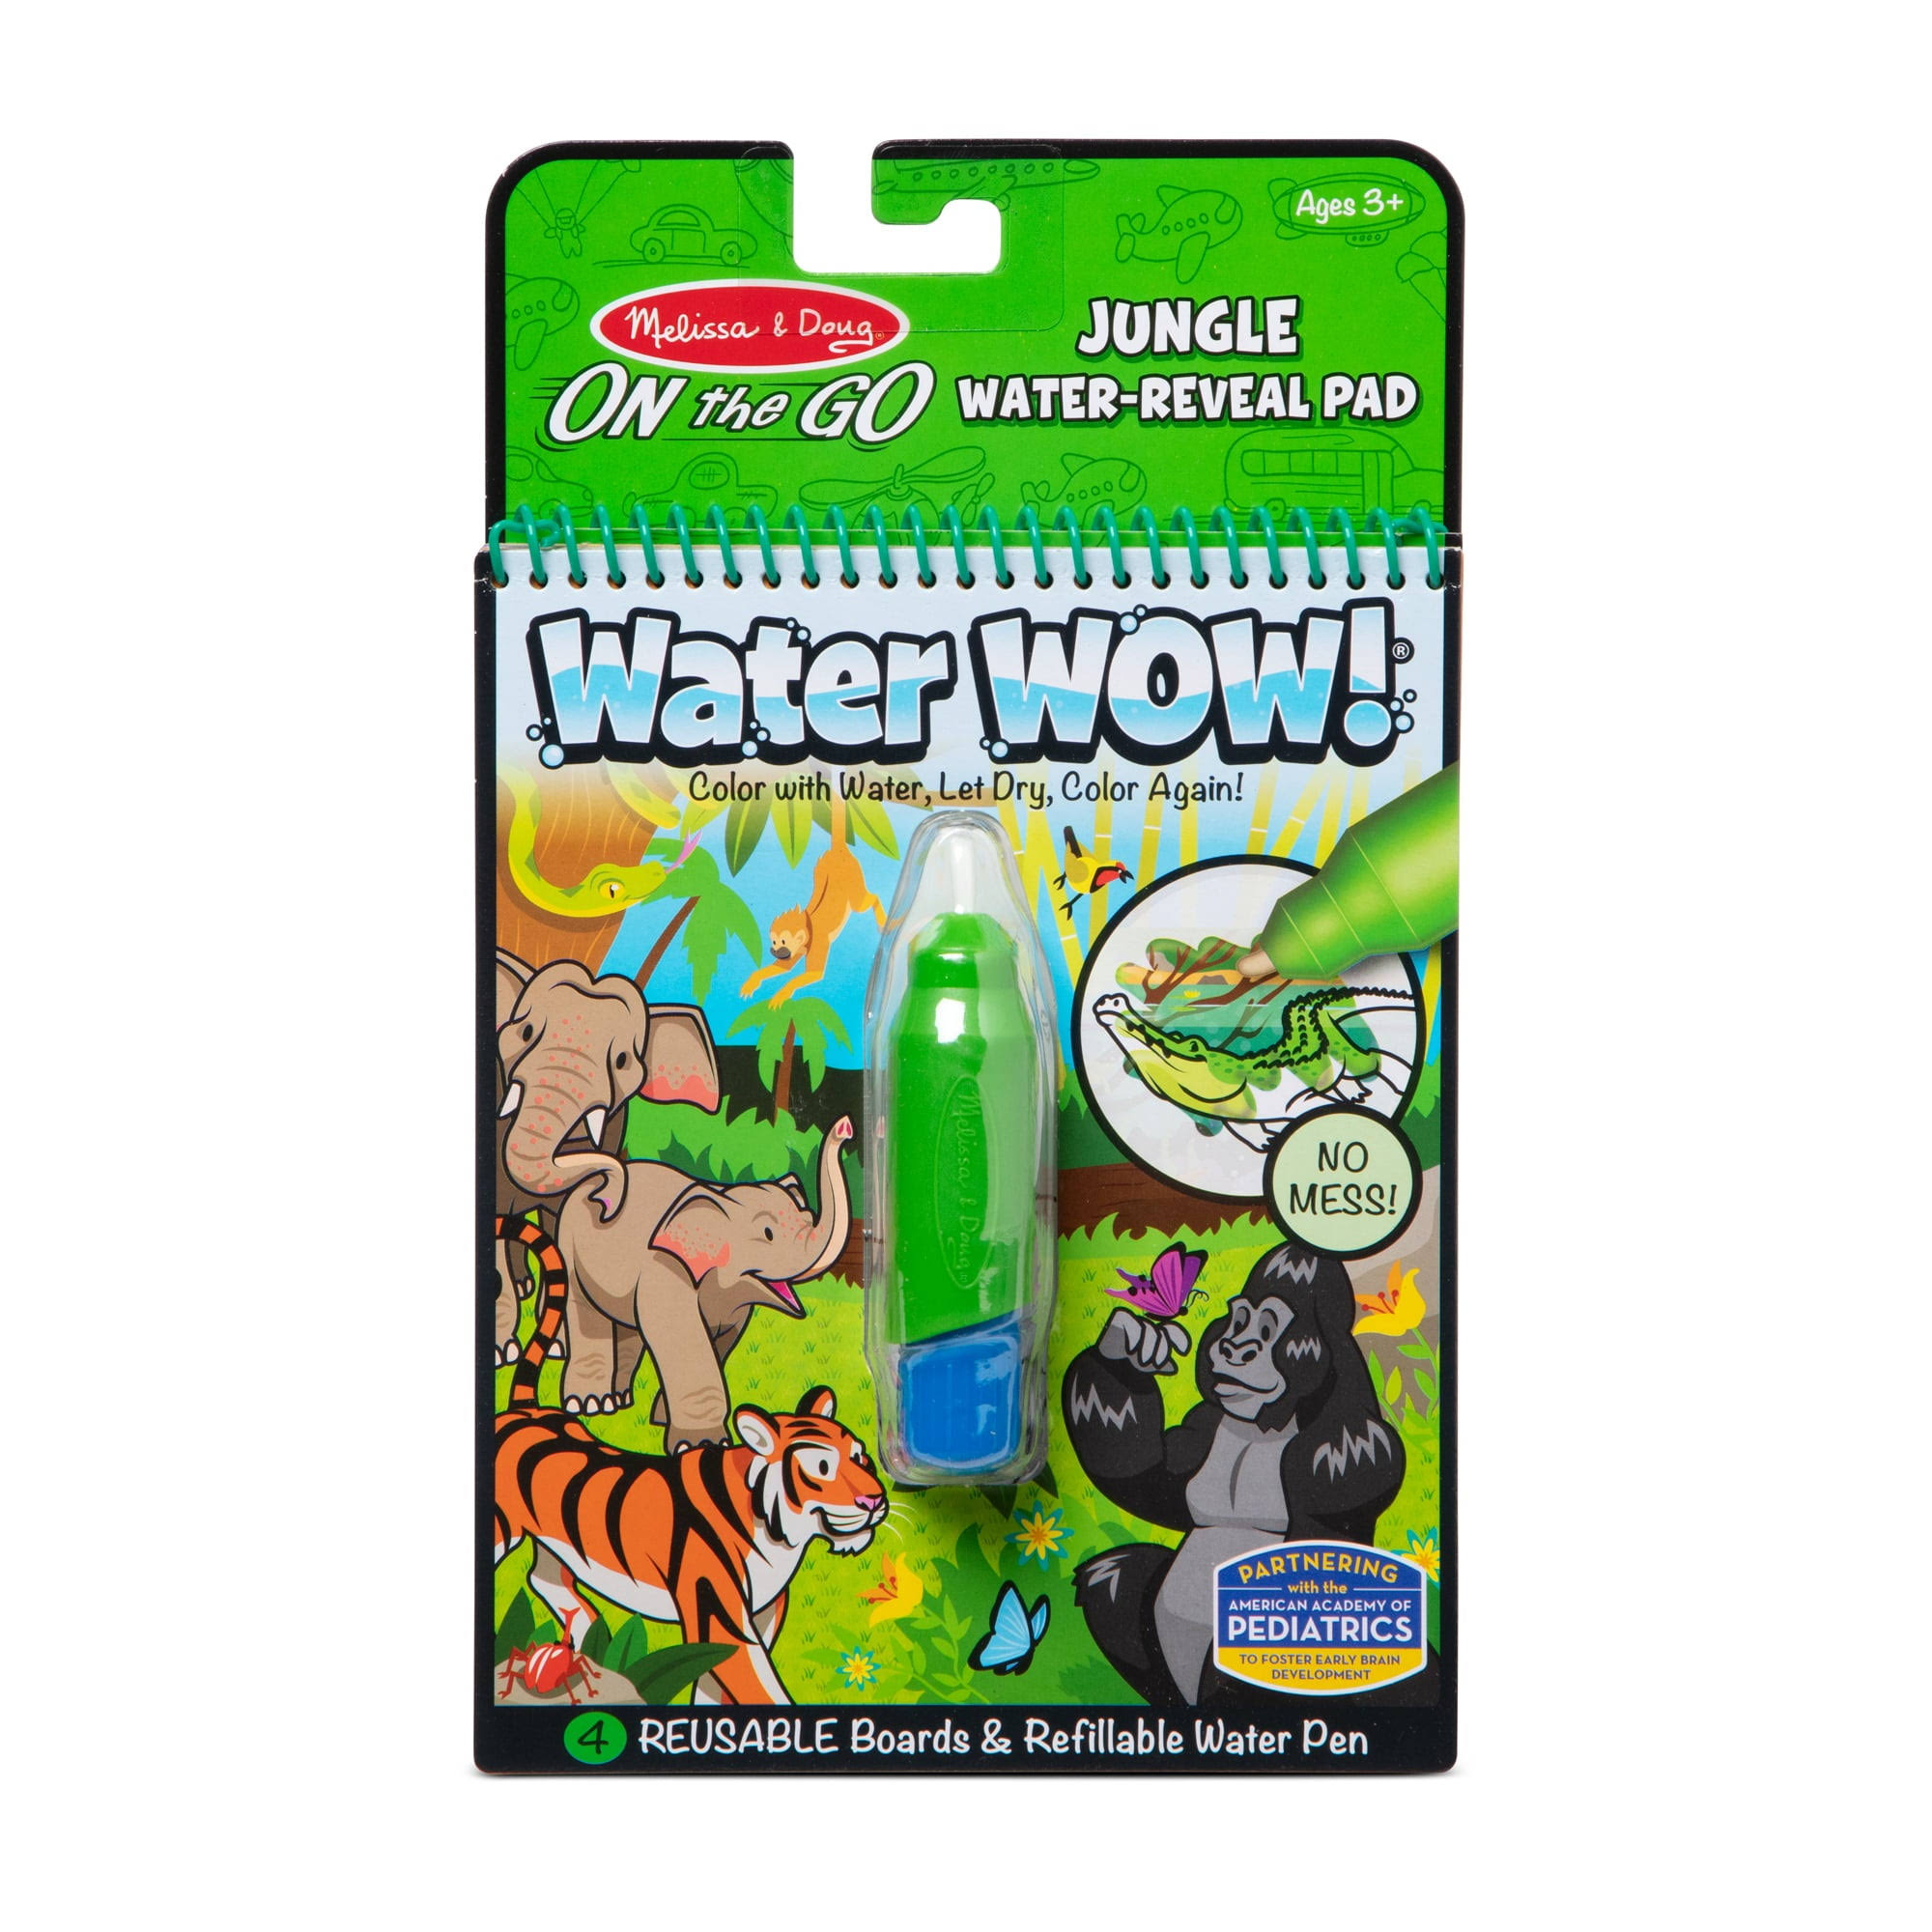 Melissa & Doug Water Wow! Jungle Water Reveal Pad